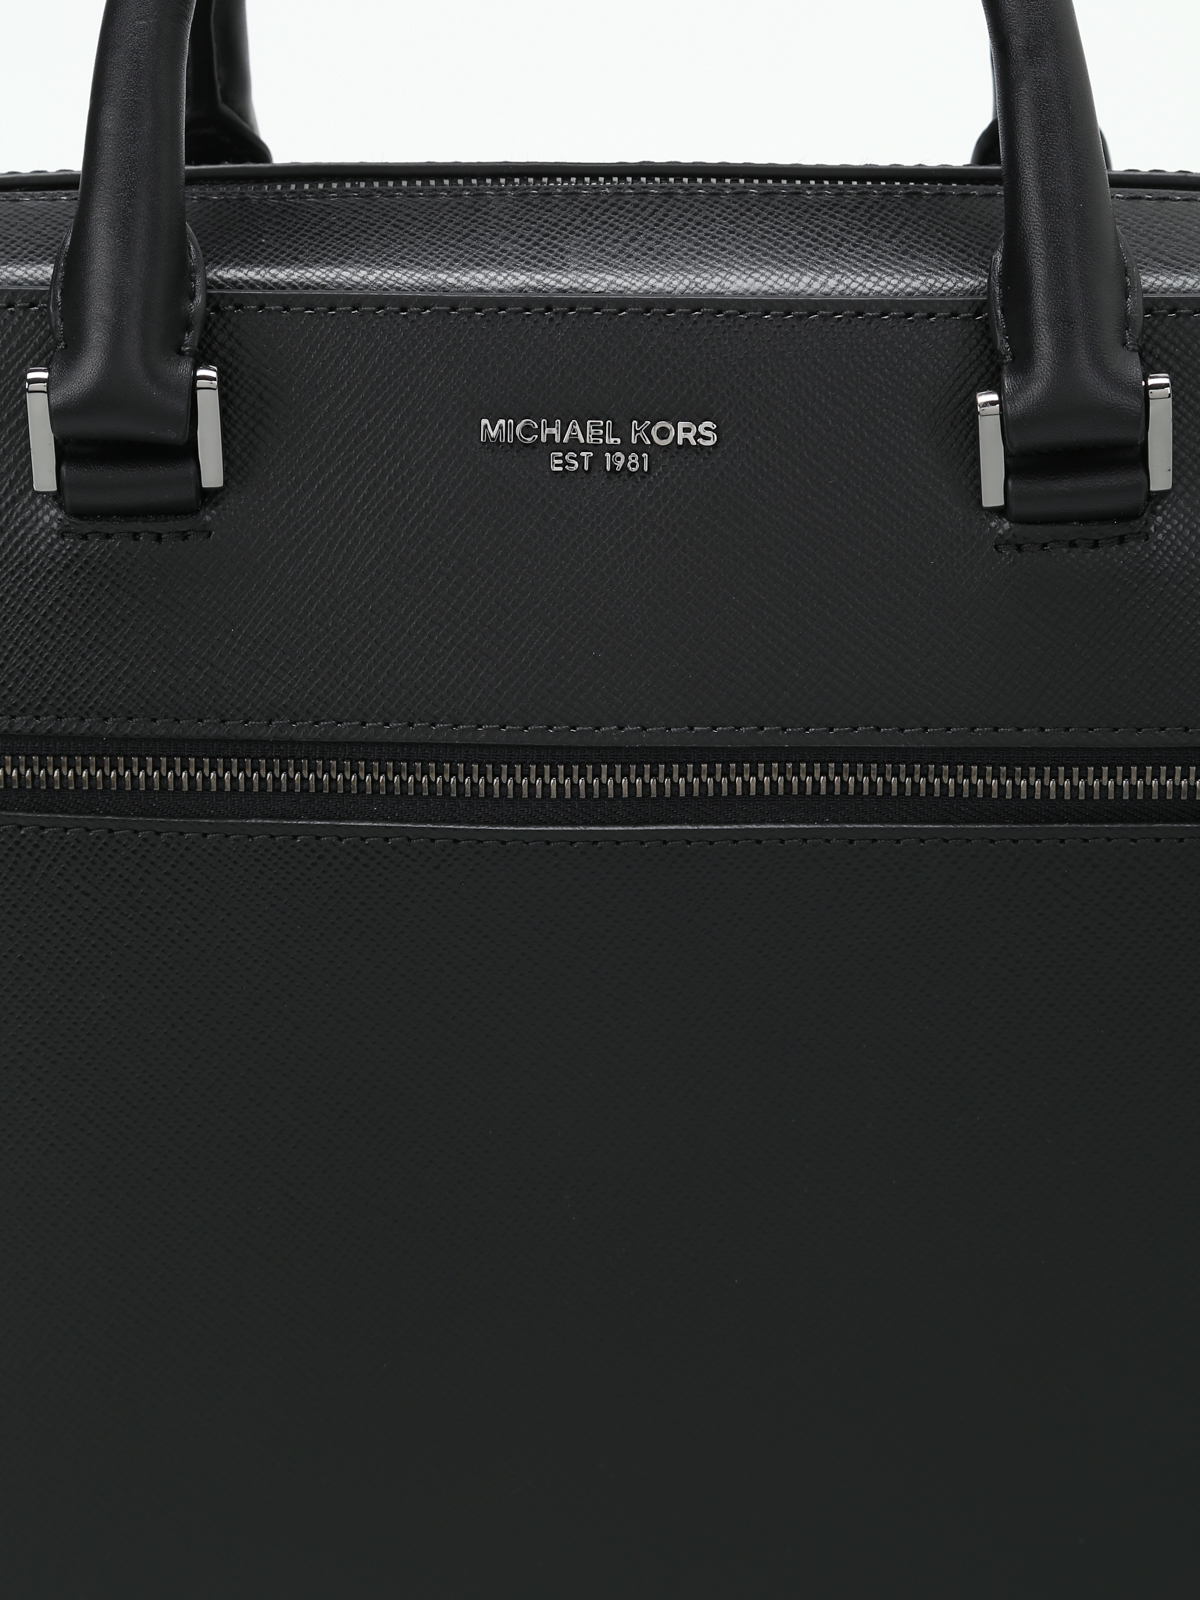 michael kors mens harrison leather briefcase